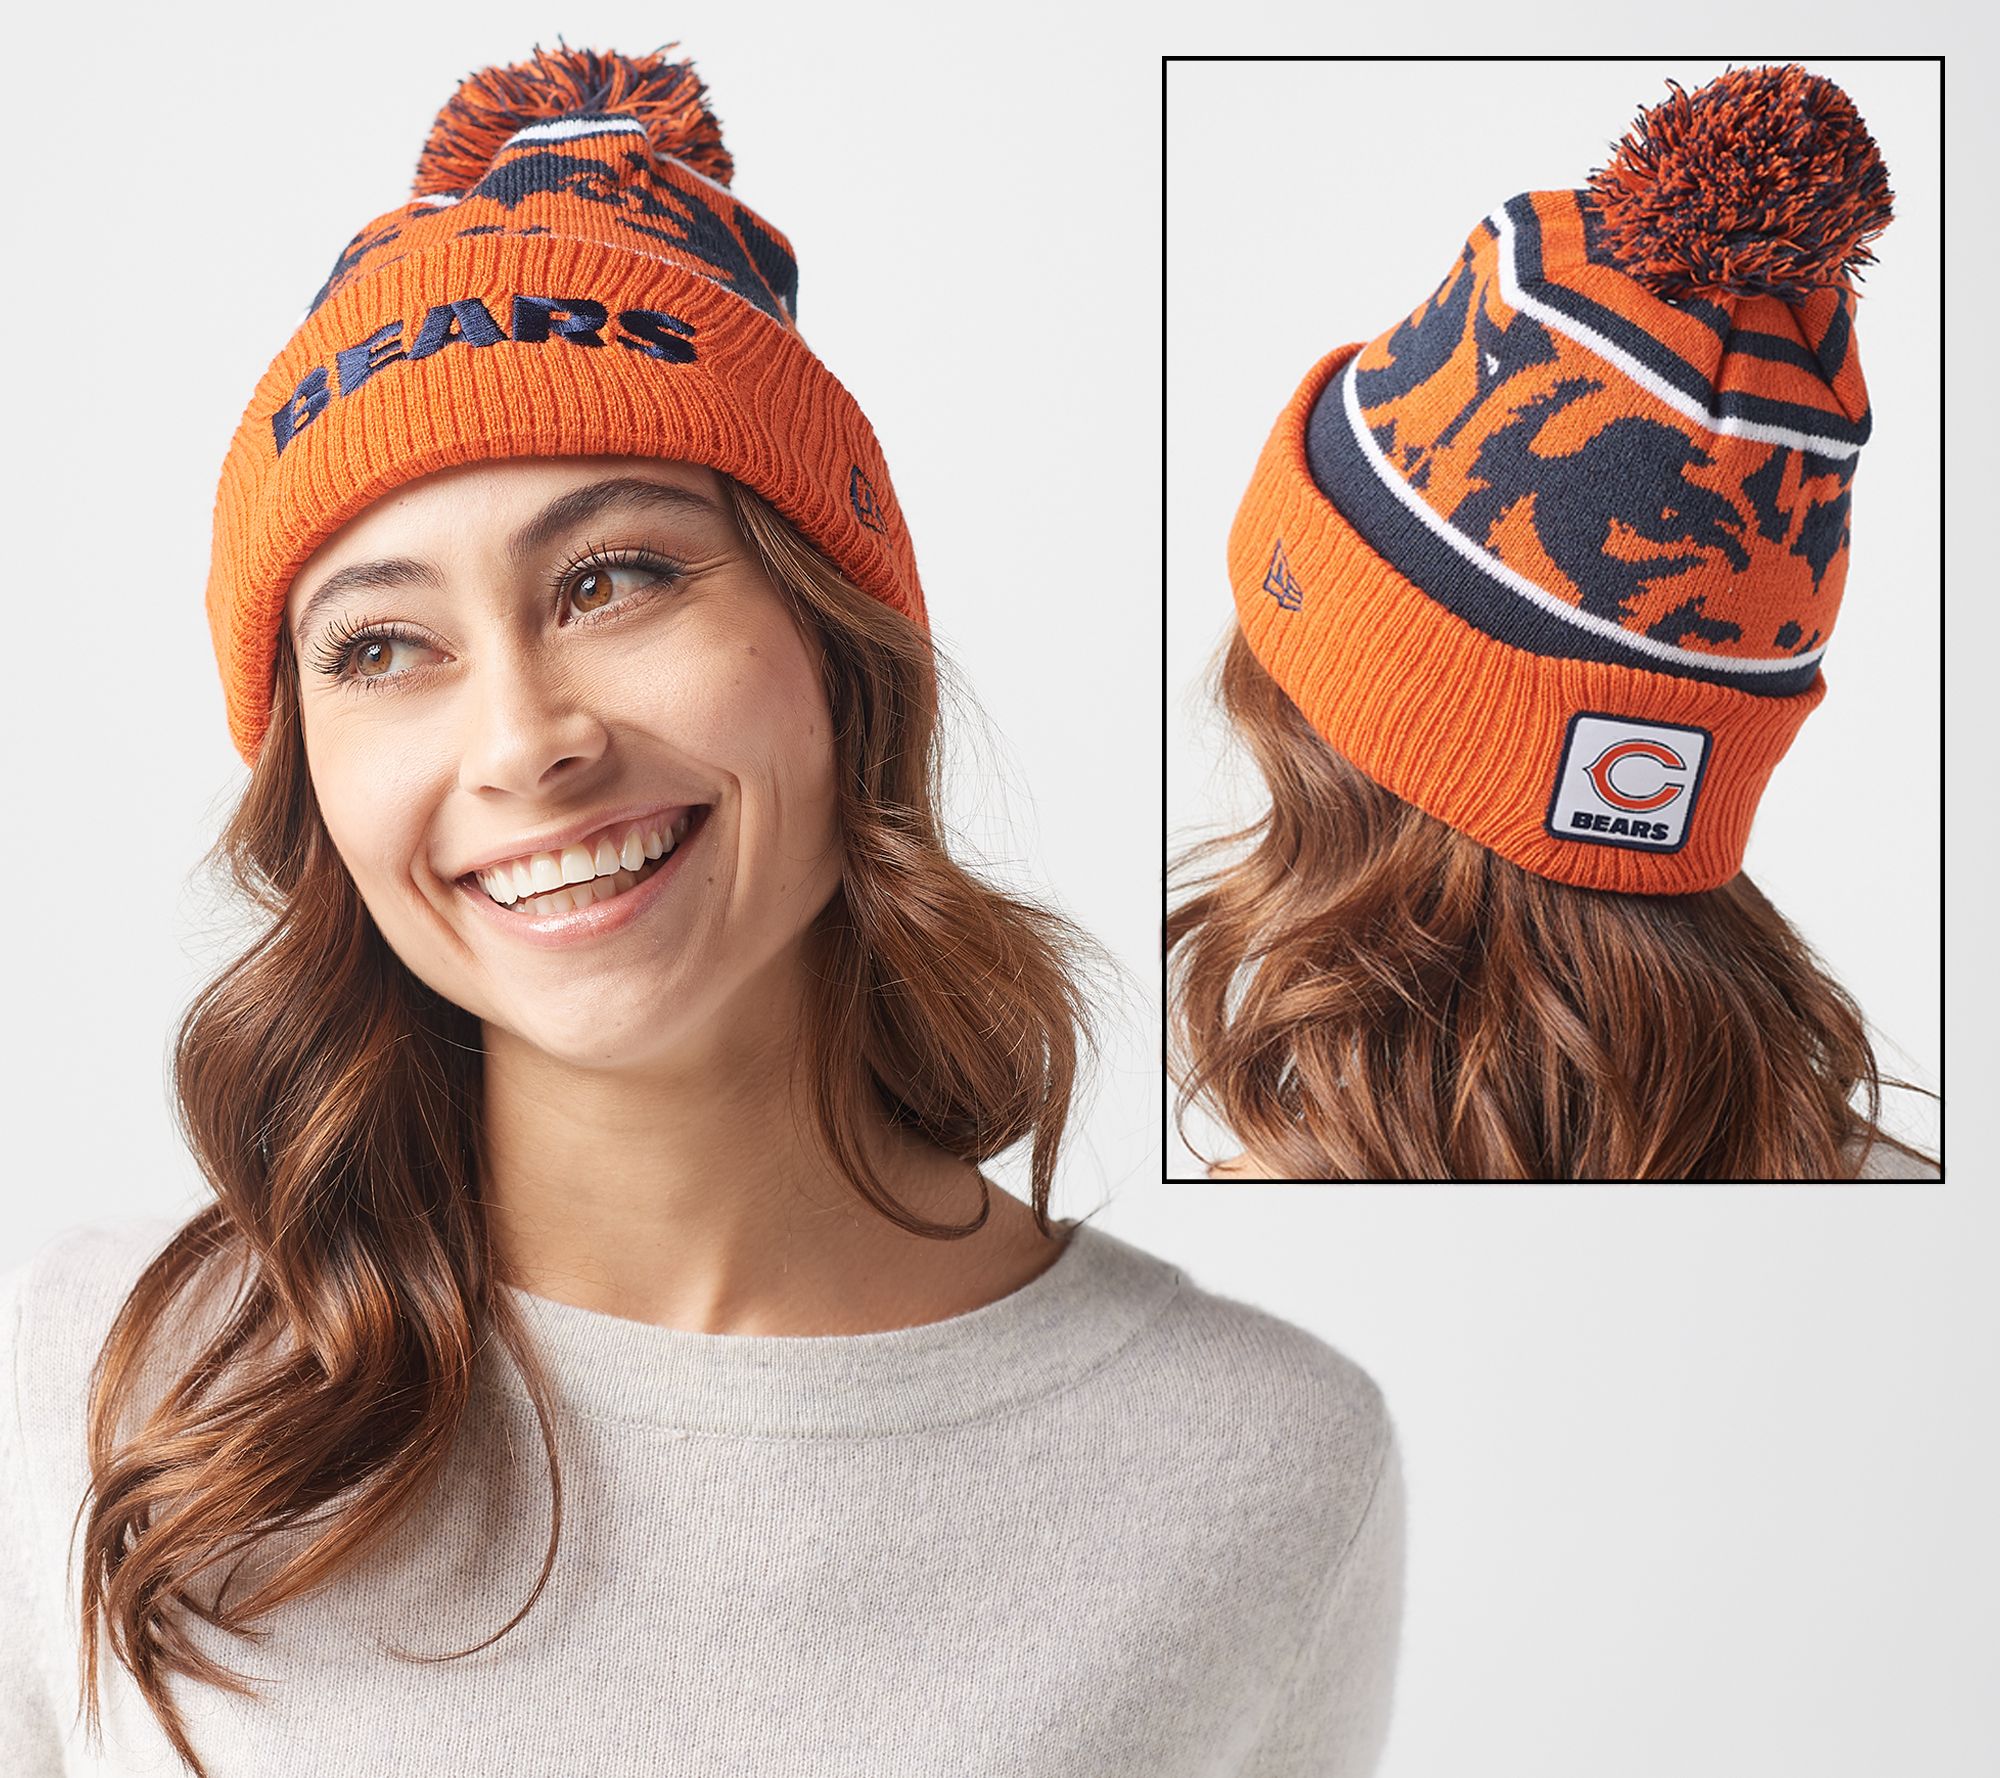 Hele Top Football Team Logo Fans Hats Winter Knit Cuffed Stylish Beanie Knit Cap Sport Hats Fashion Toque Cap 